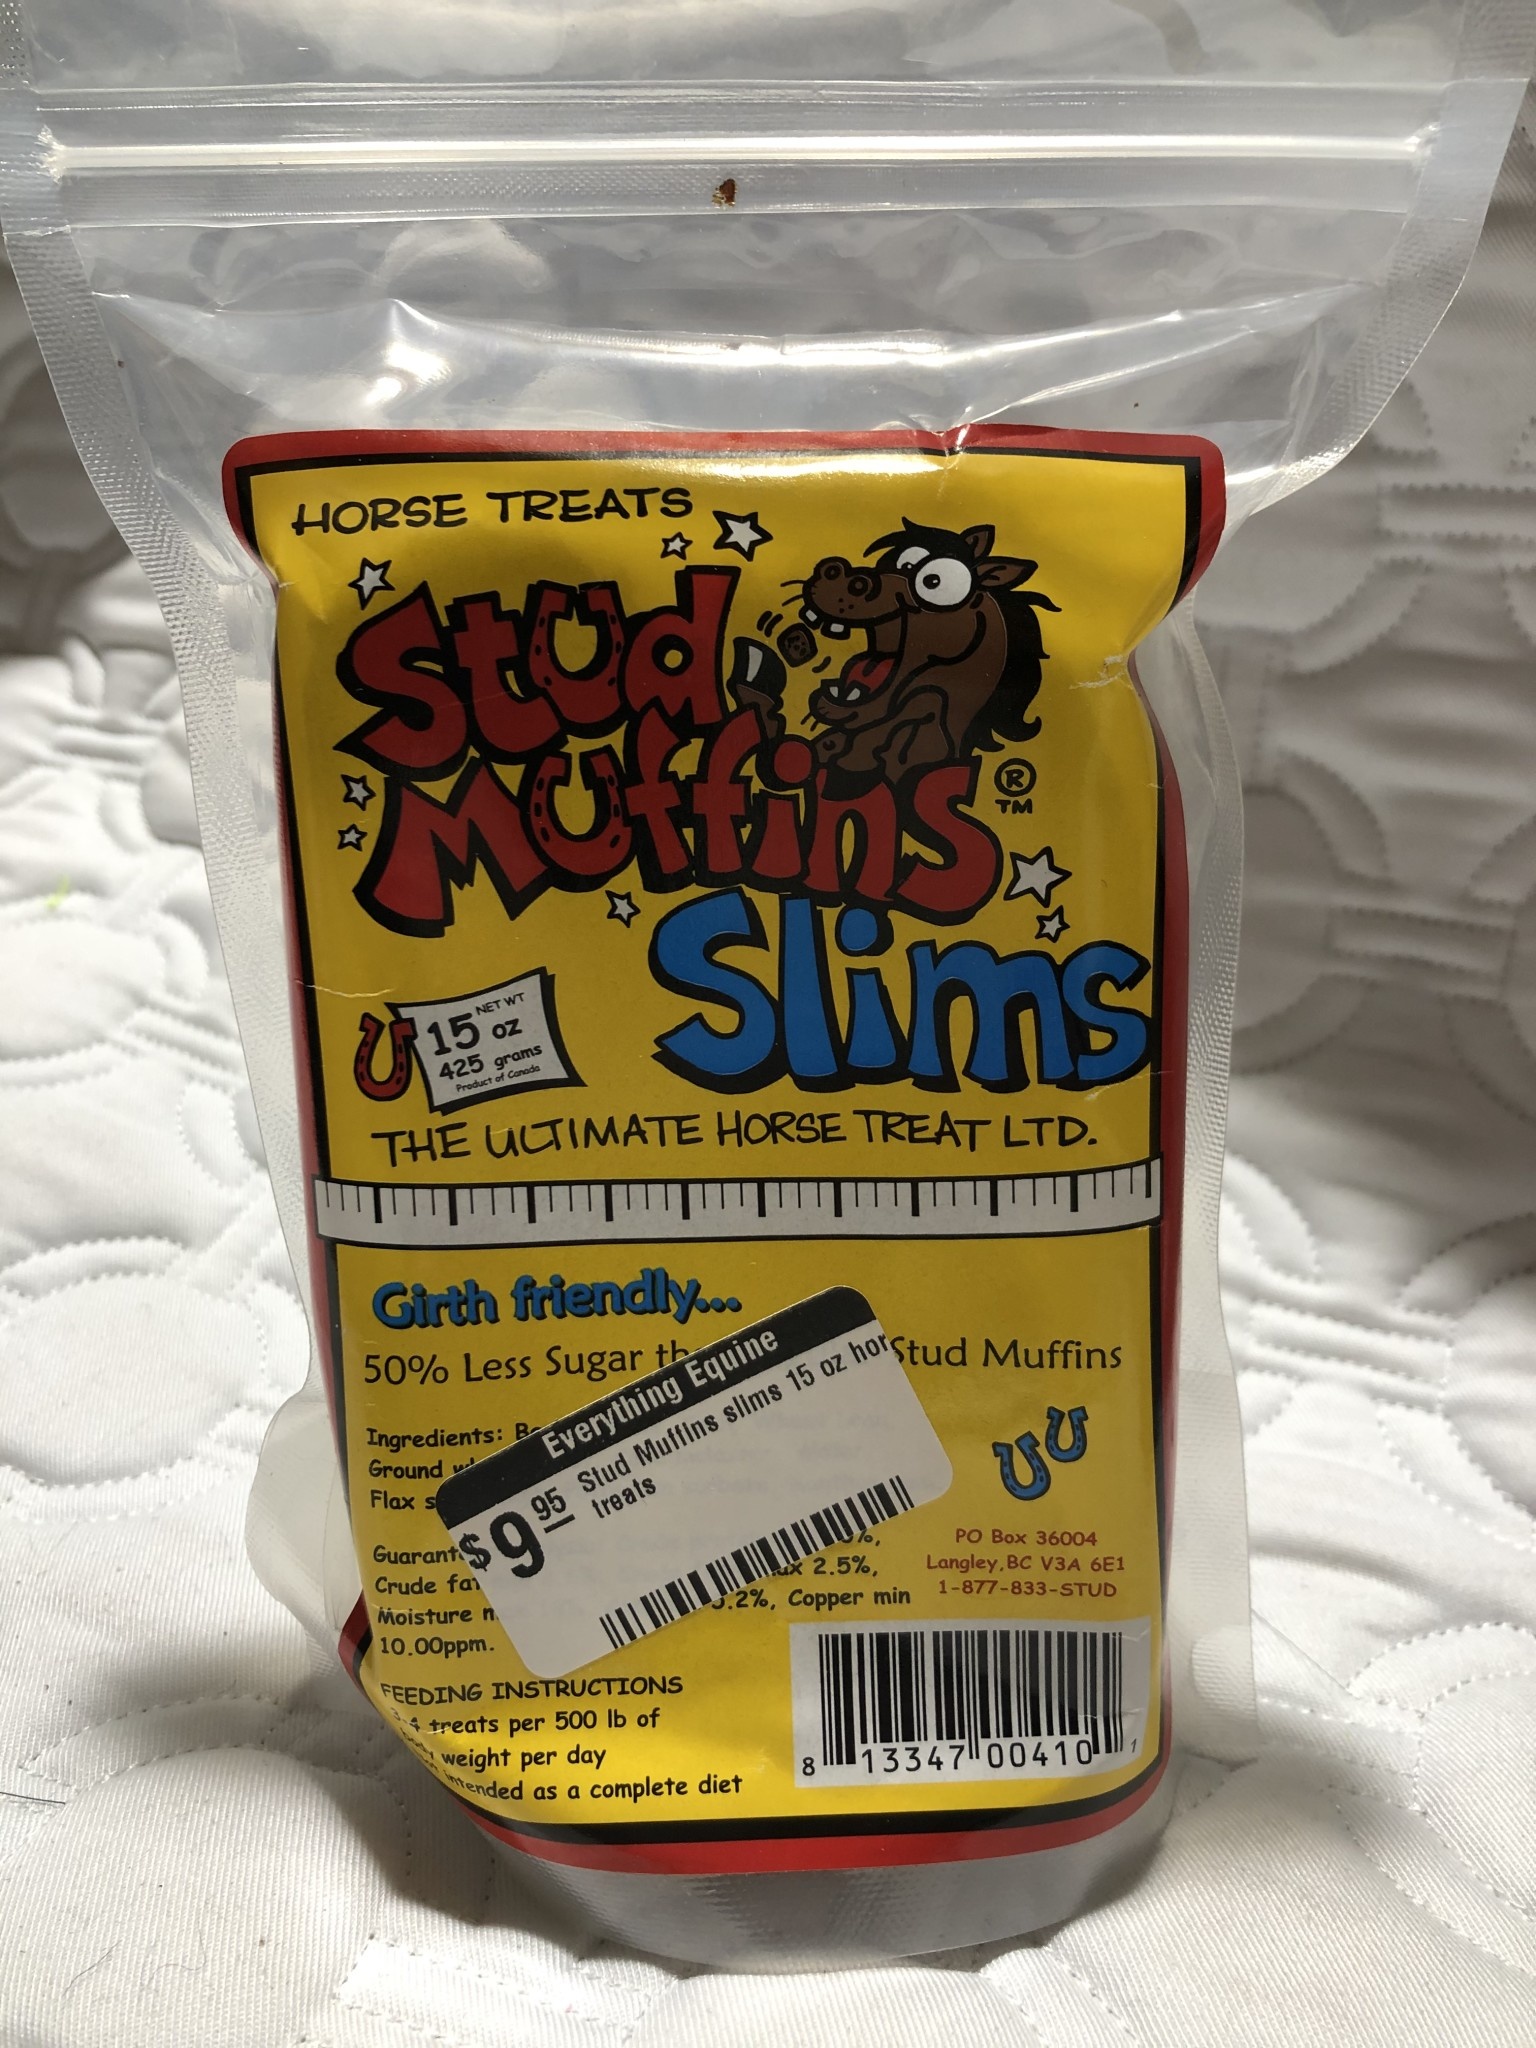 Stud Muffin Stud Muffins slims 15 oz horse treats